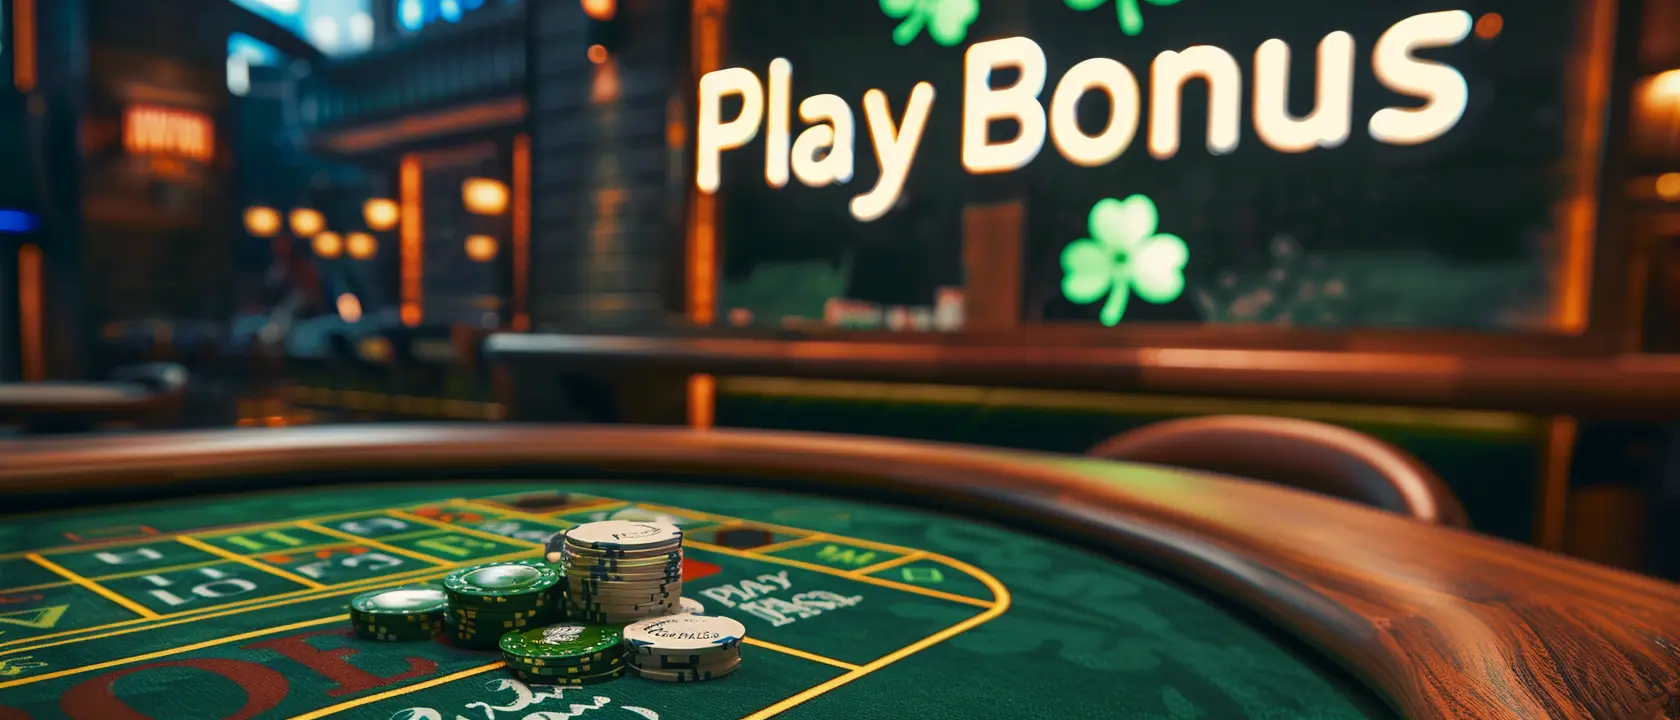 Playbonus table poker jetons casino